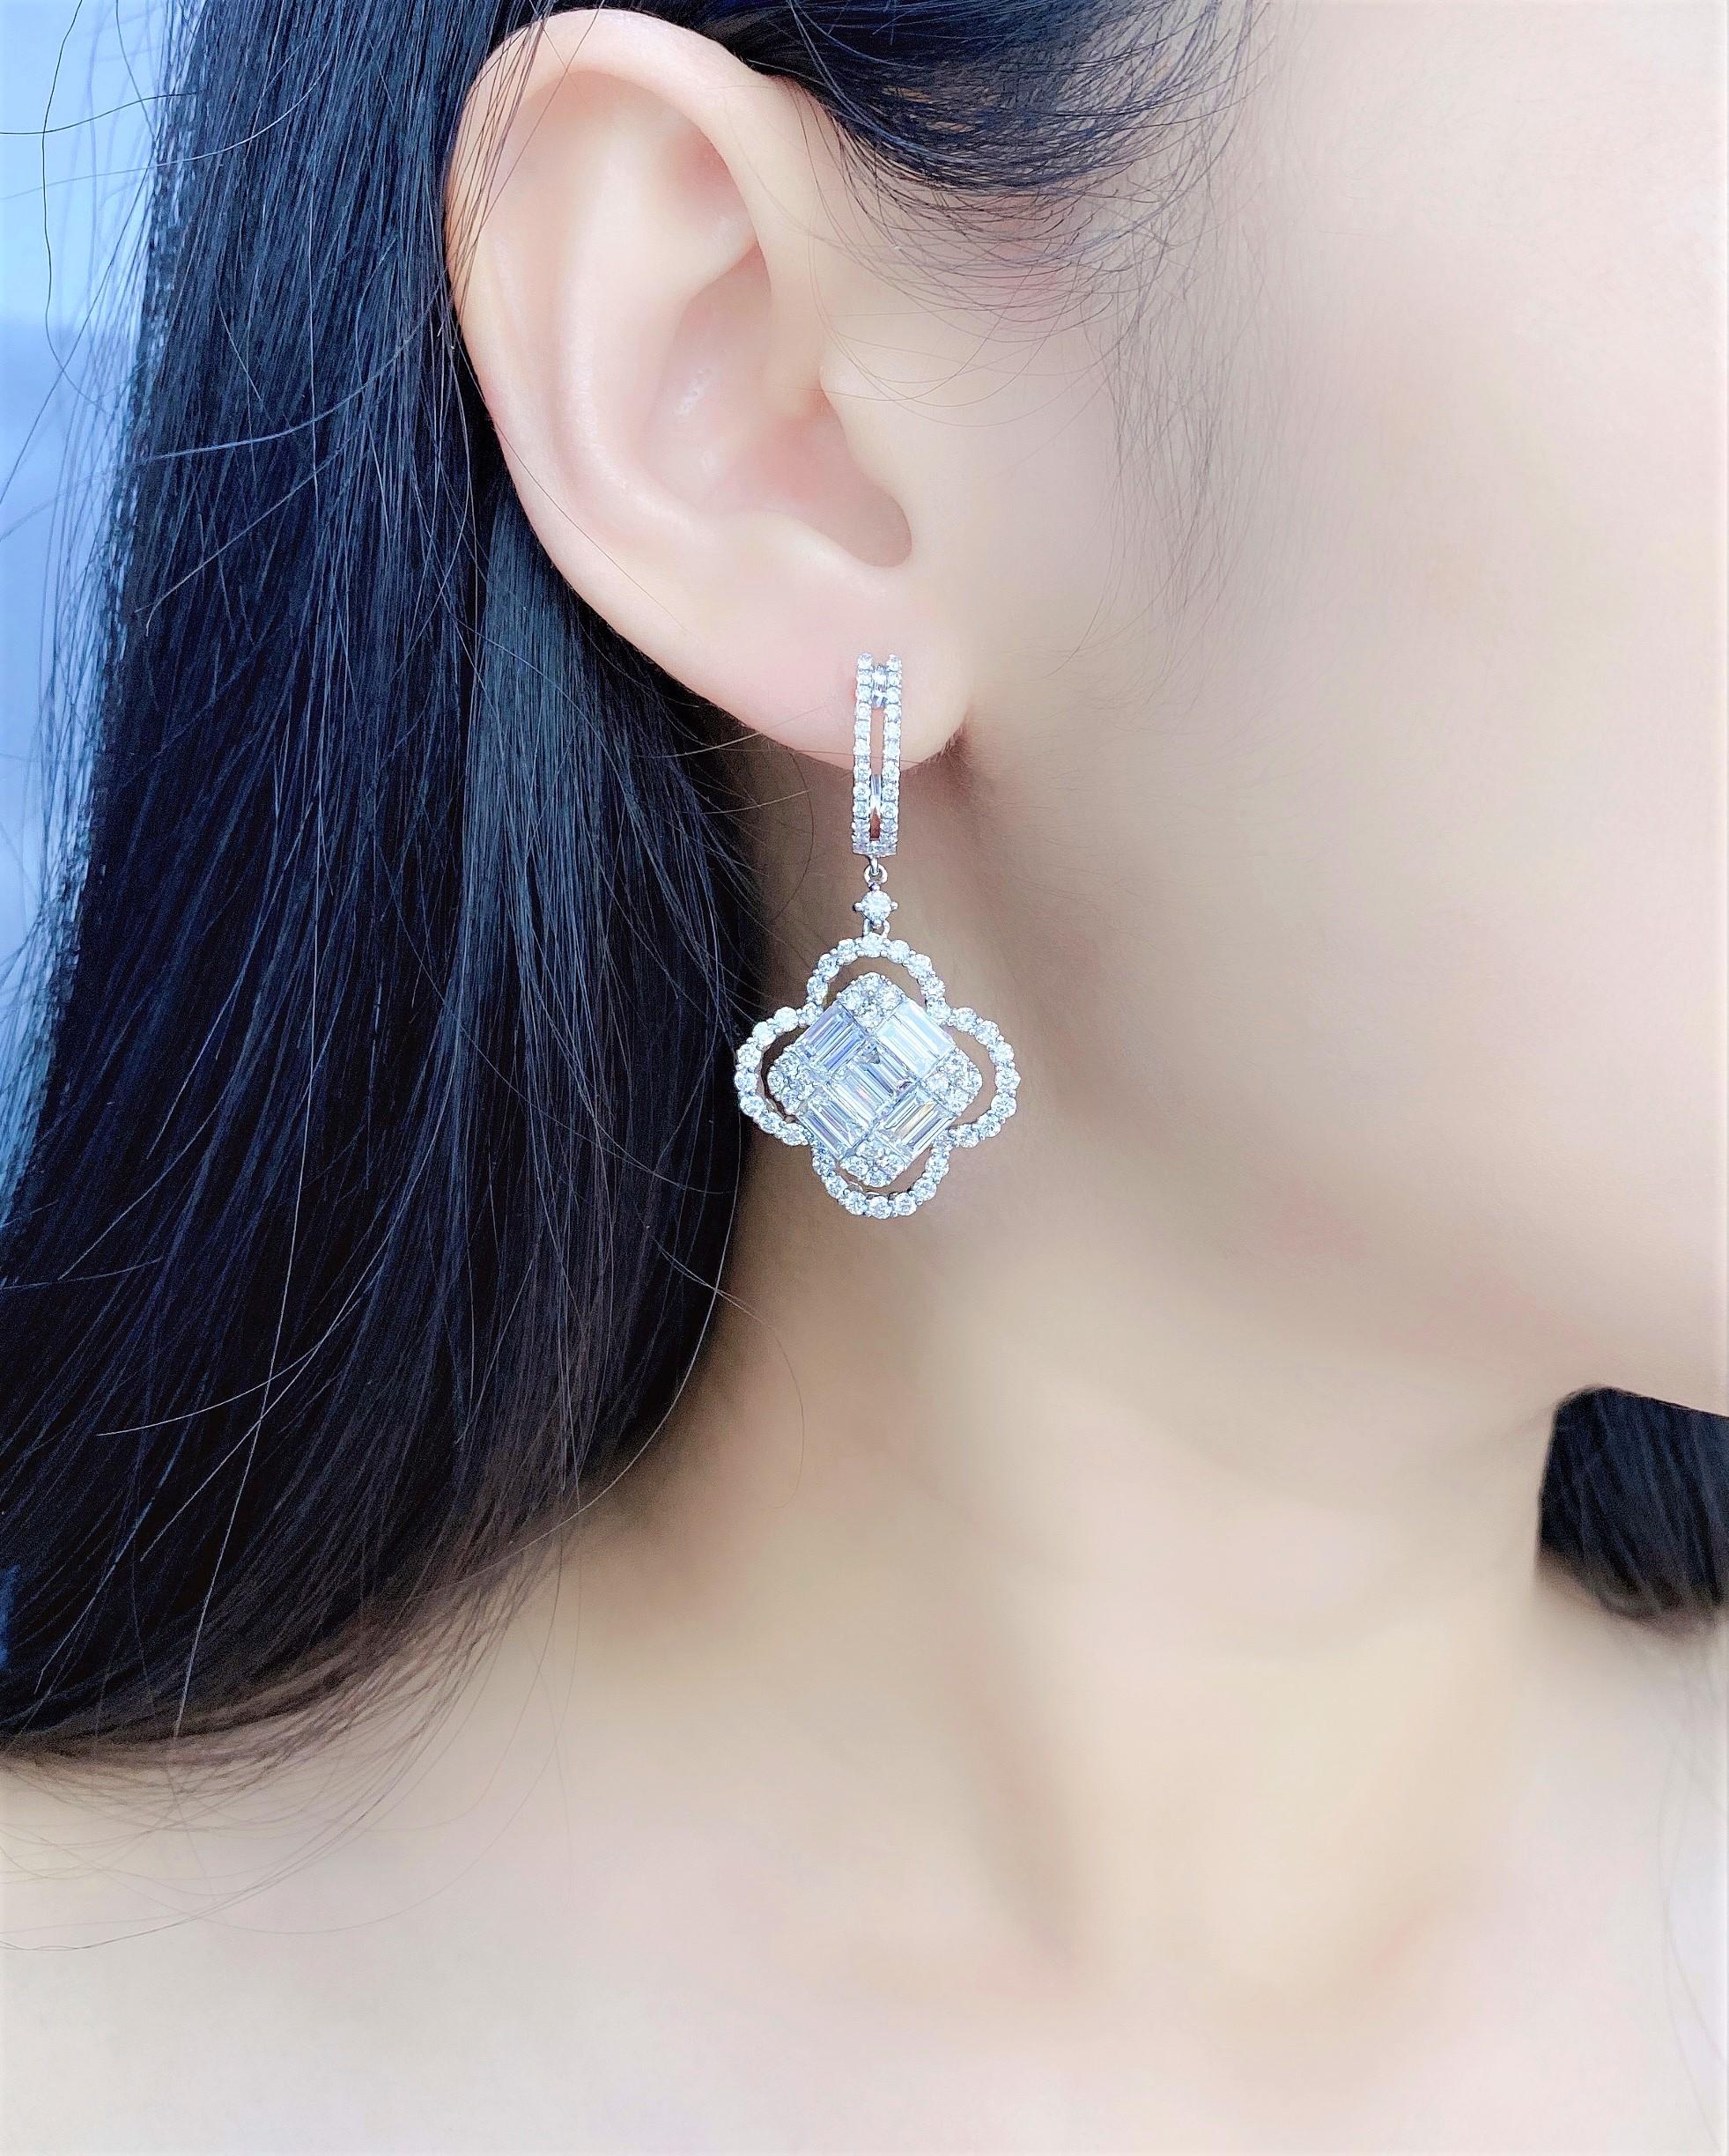 huge diamond earrings